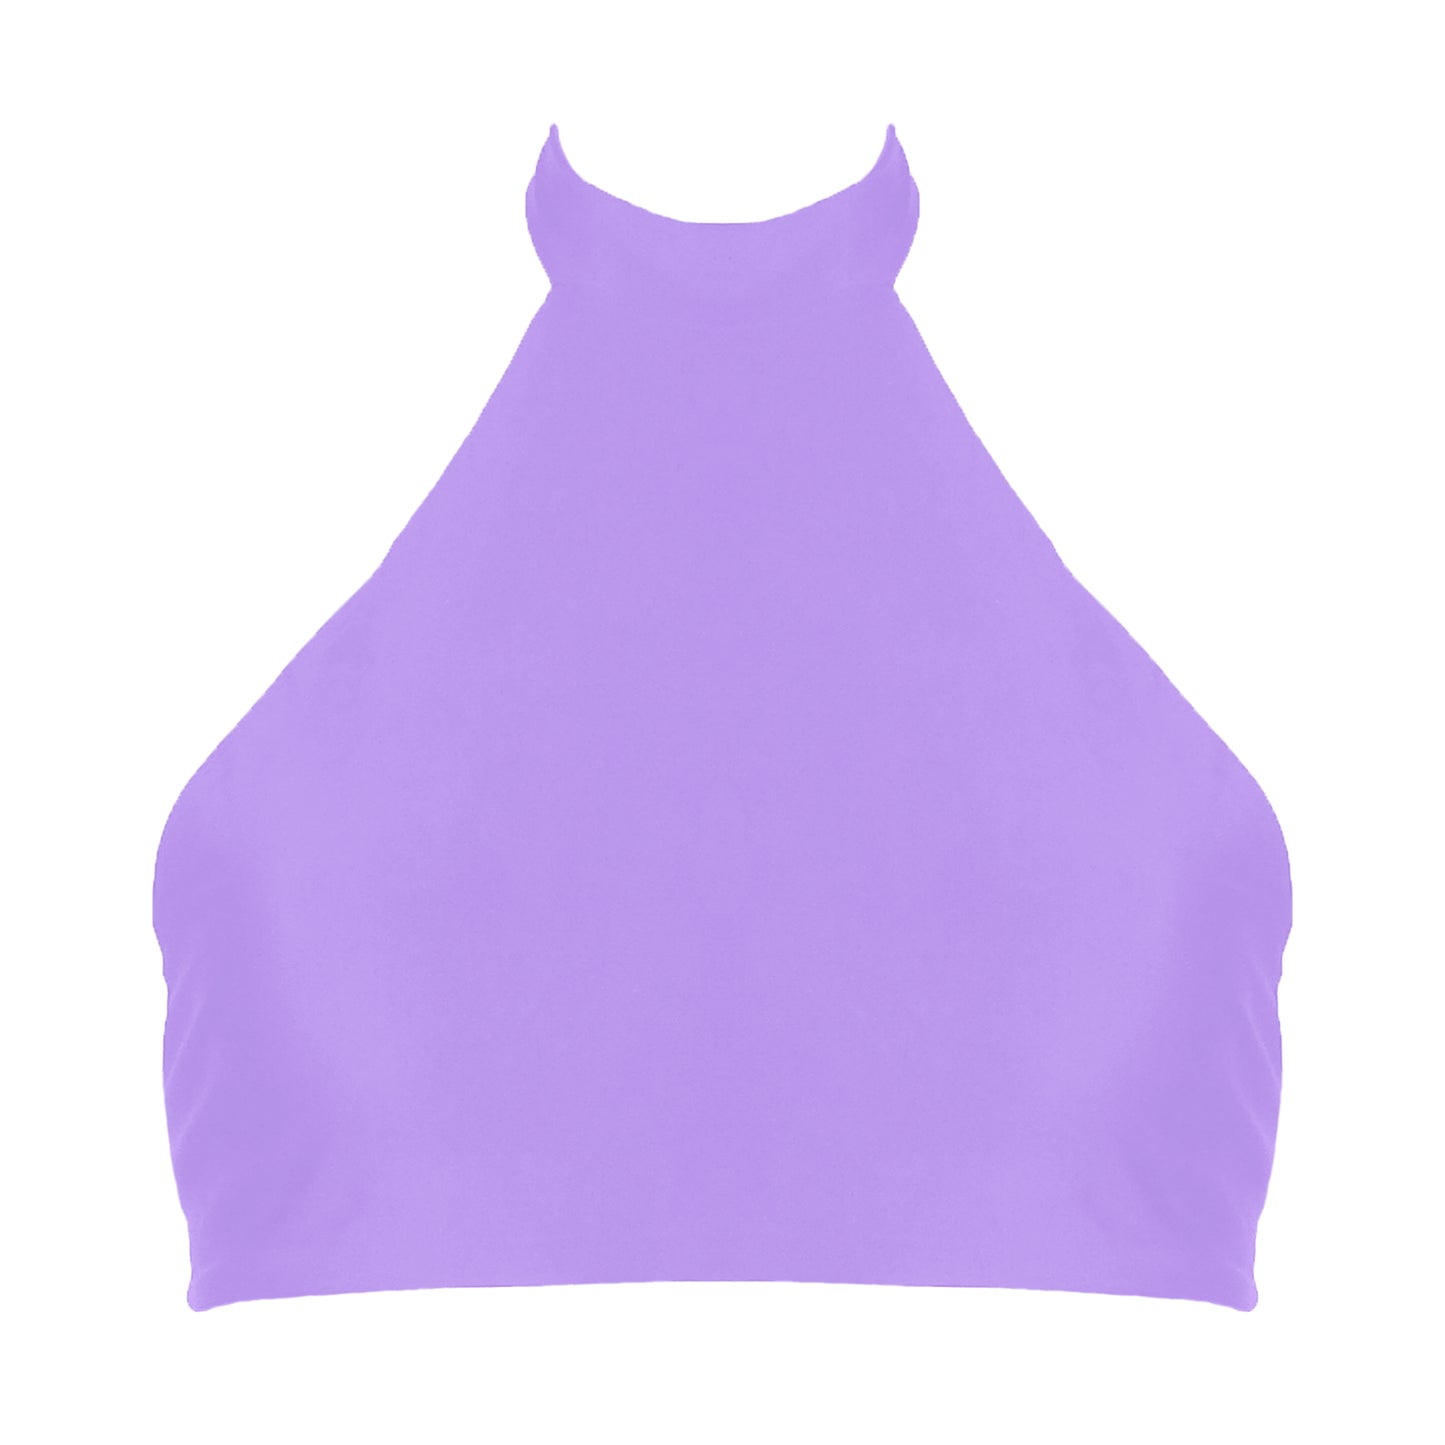 Lavender purple sport inspired halter neck bikini top with adjustable tie back straps.